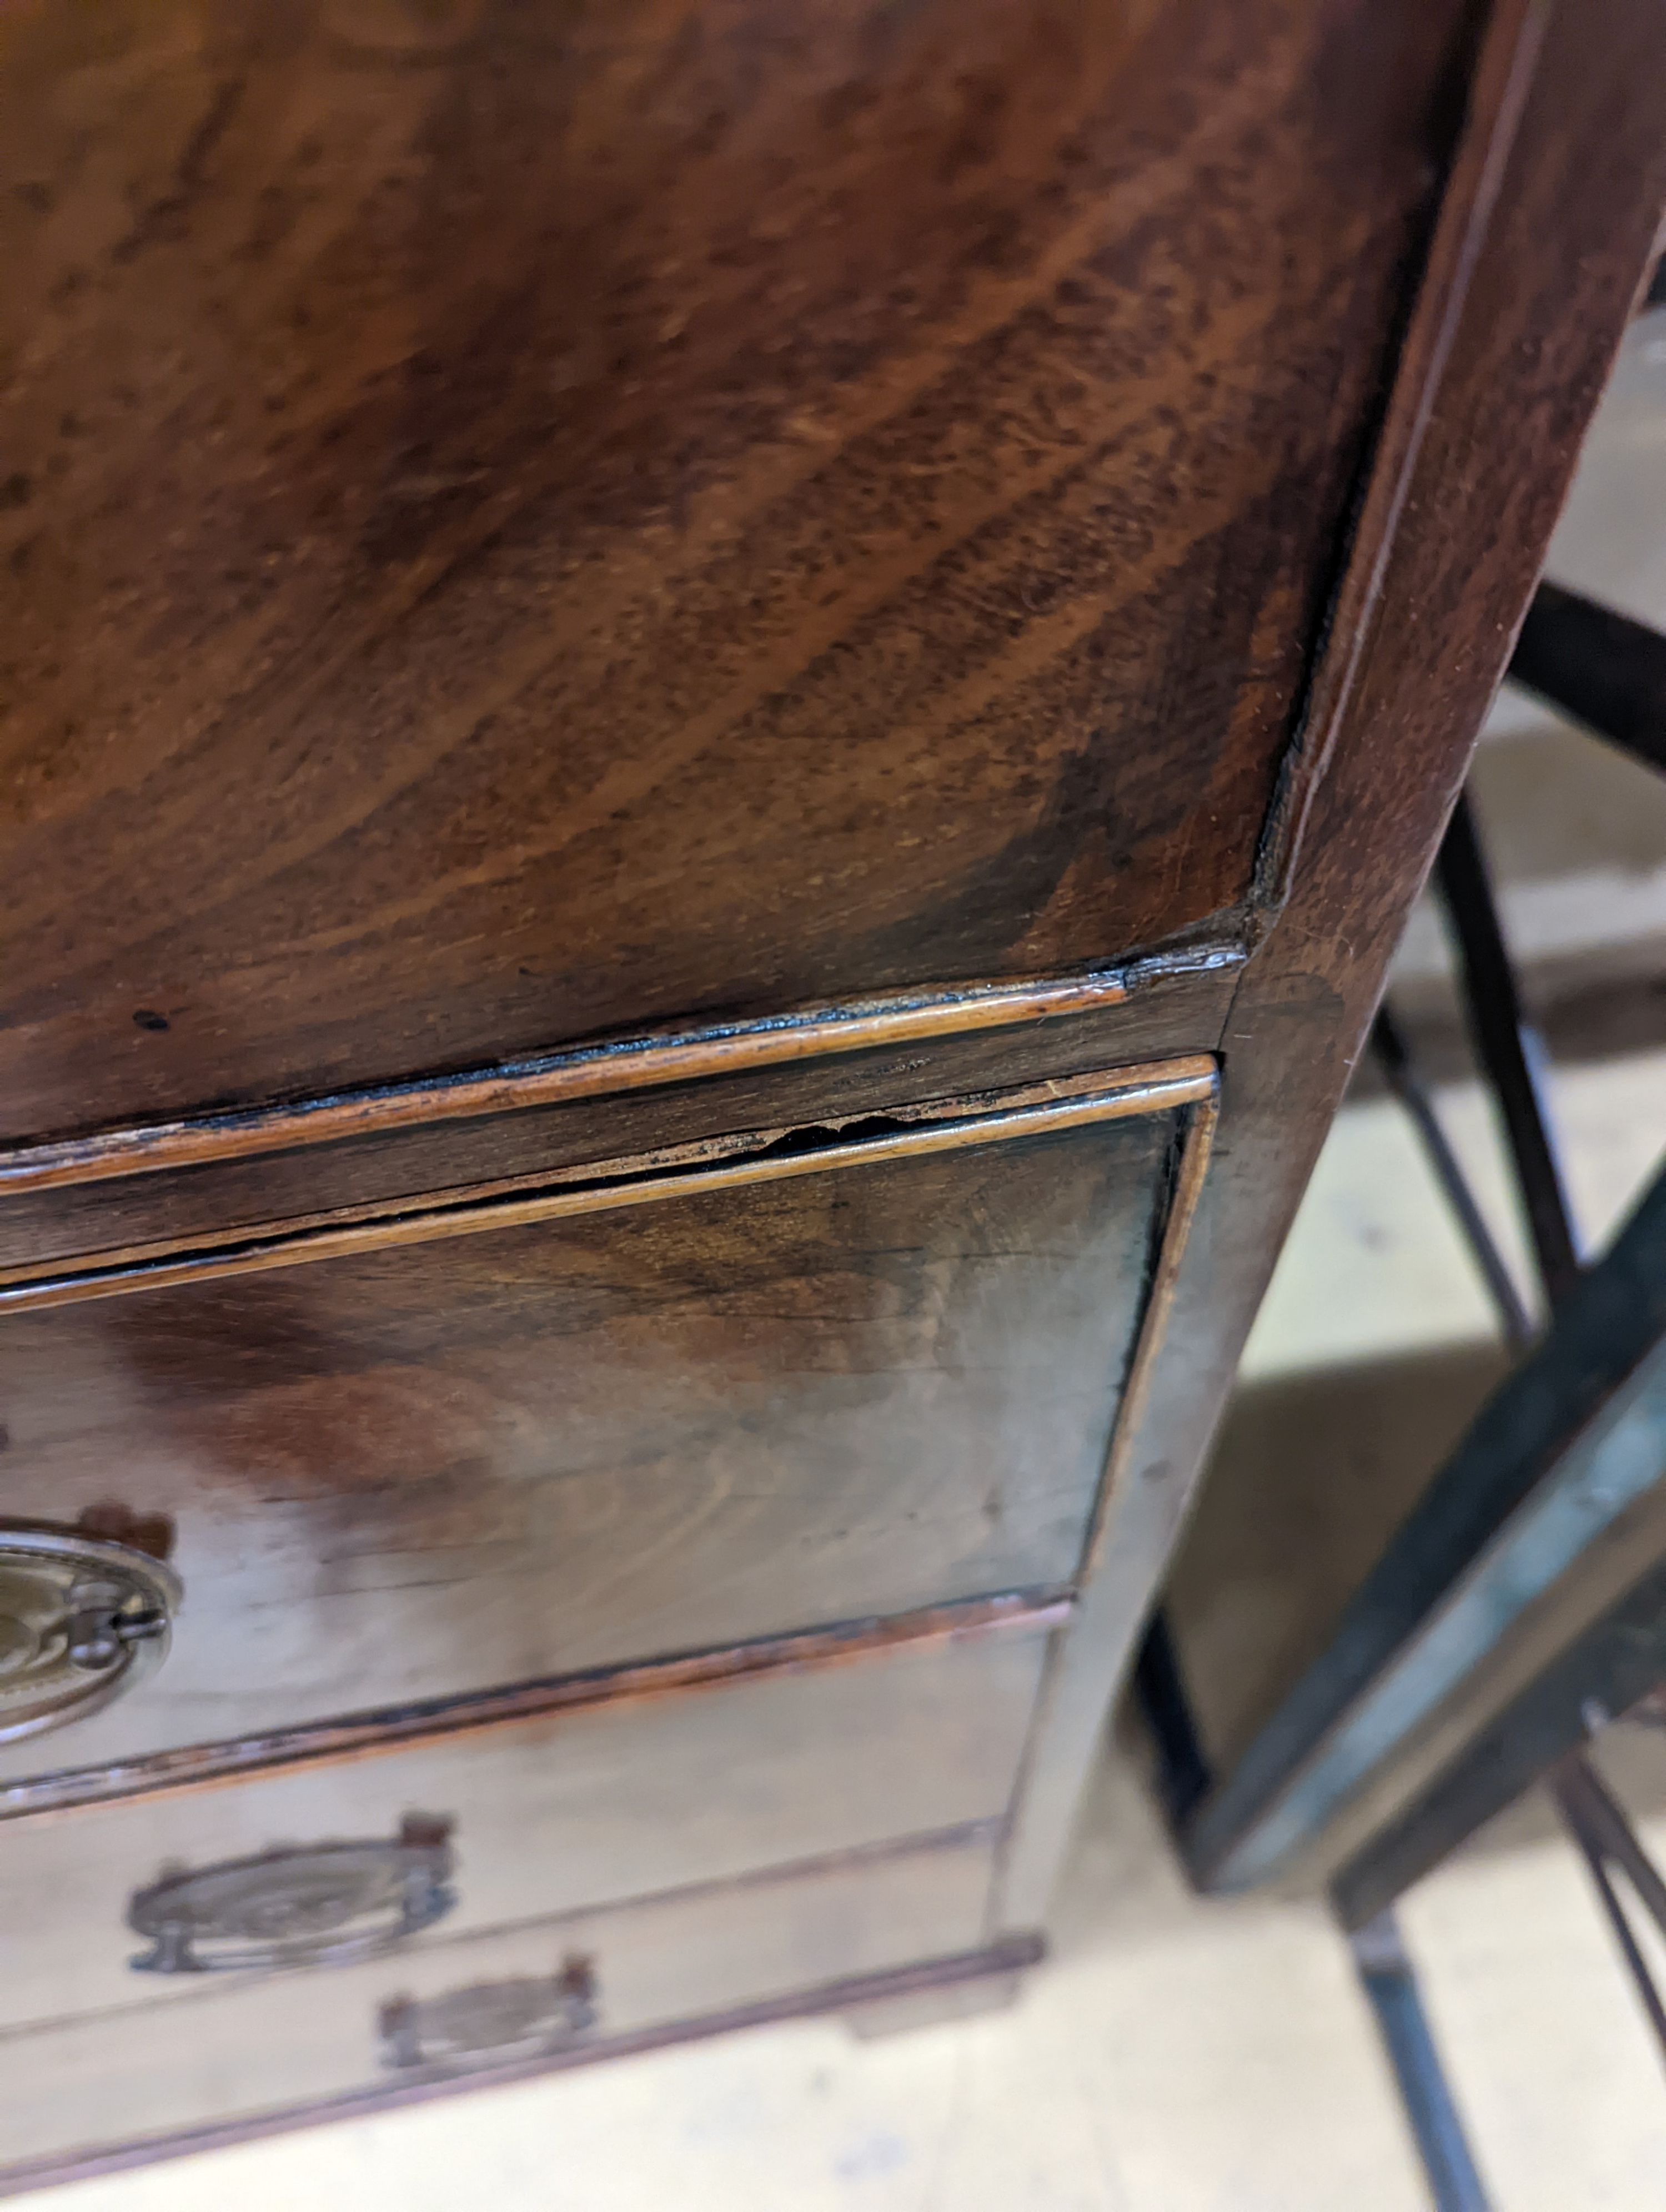 A George IV narrow mahogany secretaire bookcase, width 77cm, depth 48cm, height 207cm